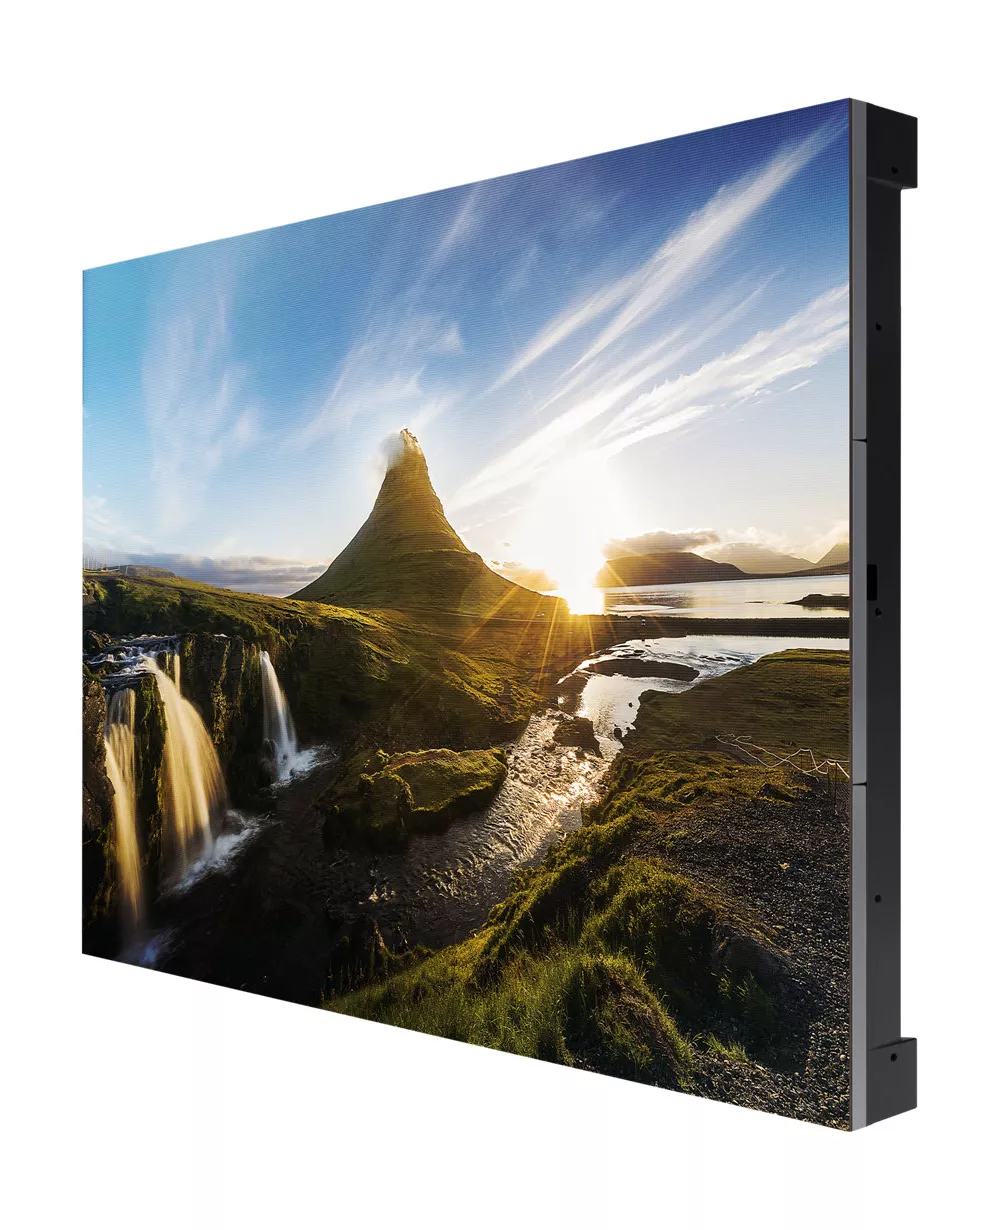 Vente Samsung IFJ-series 1.2 pixel pitch Indoor LED cabinet Samsung au meilleur prix - visuel 2